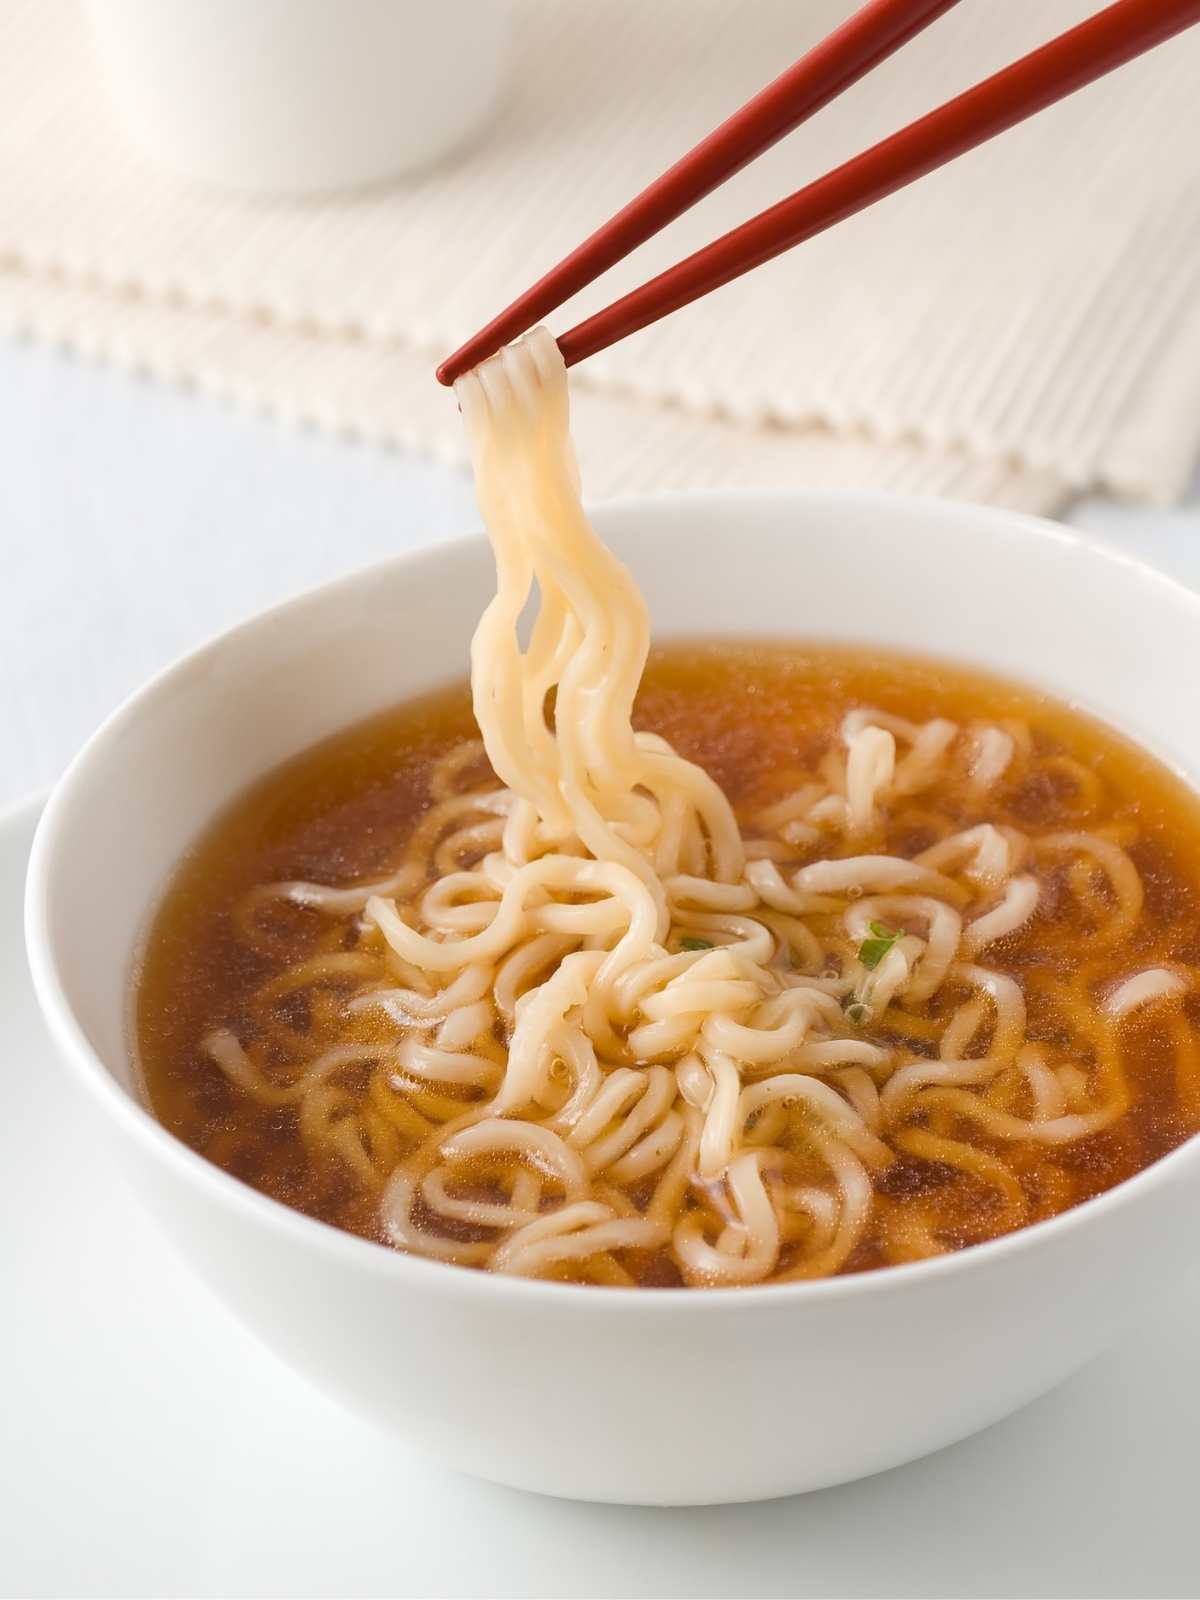 White bowl of ramen noodles with chopsticks holding a bit of noodles.